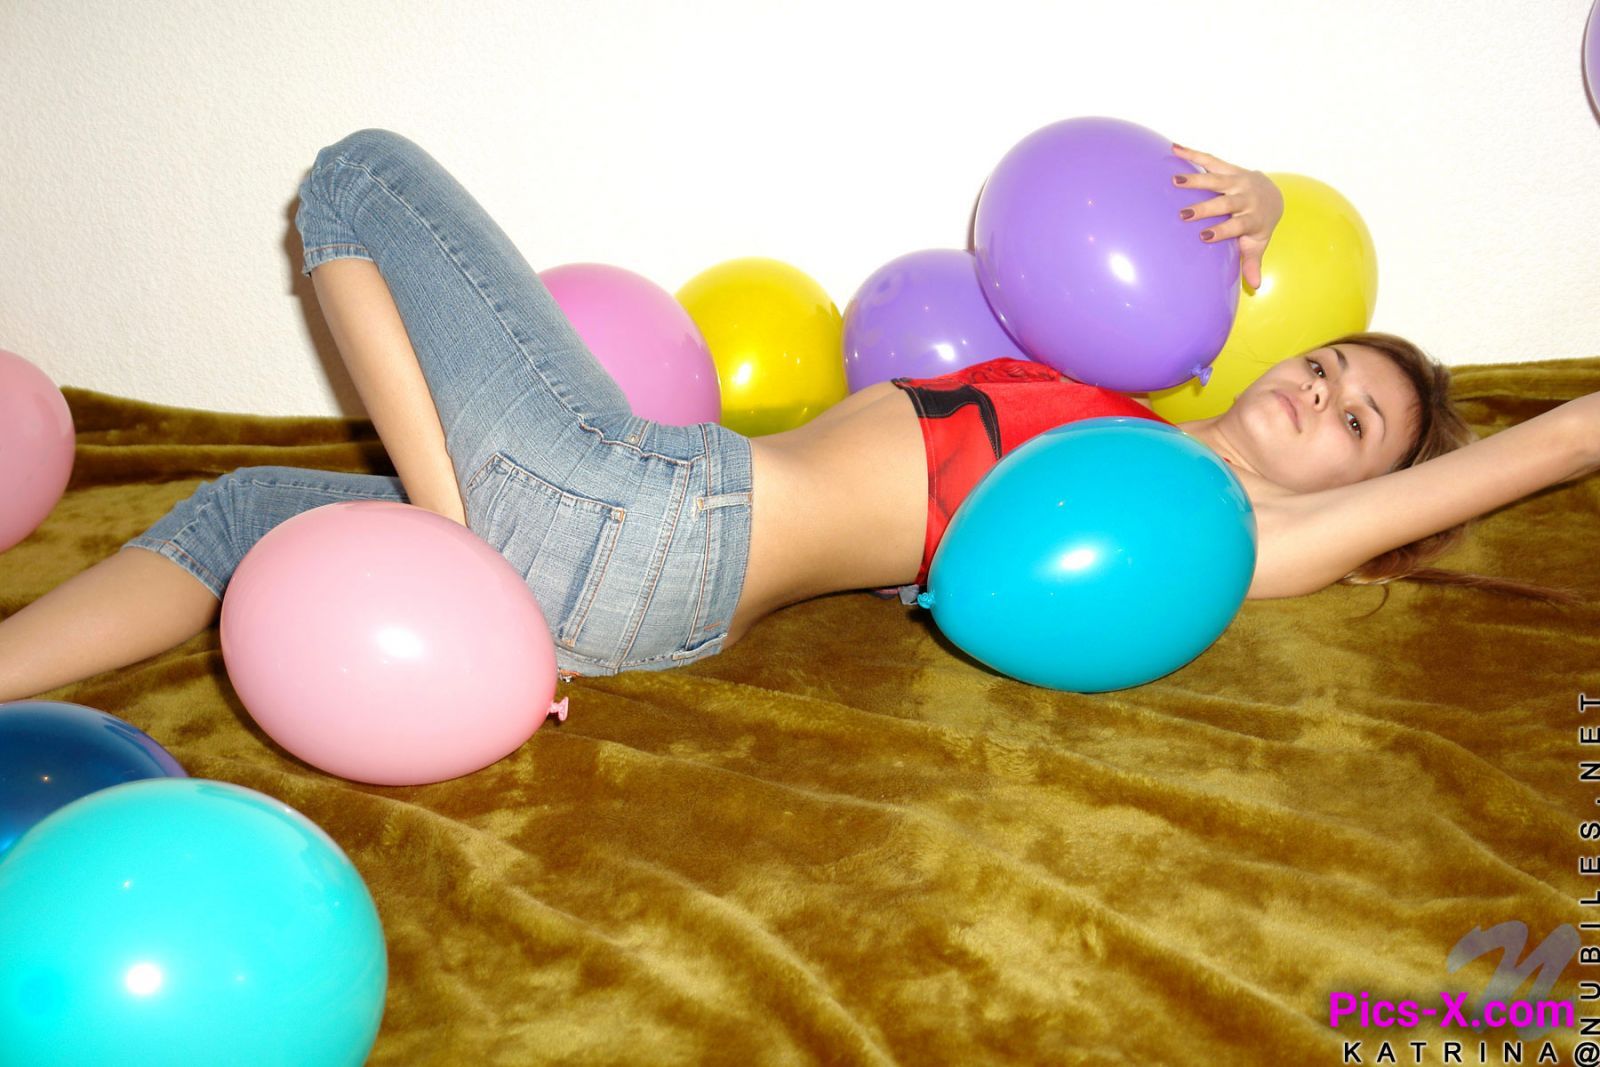 4balloon Plays - Nubiles - Image 22